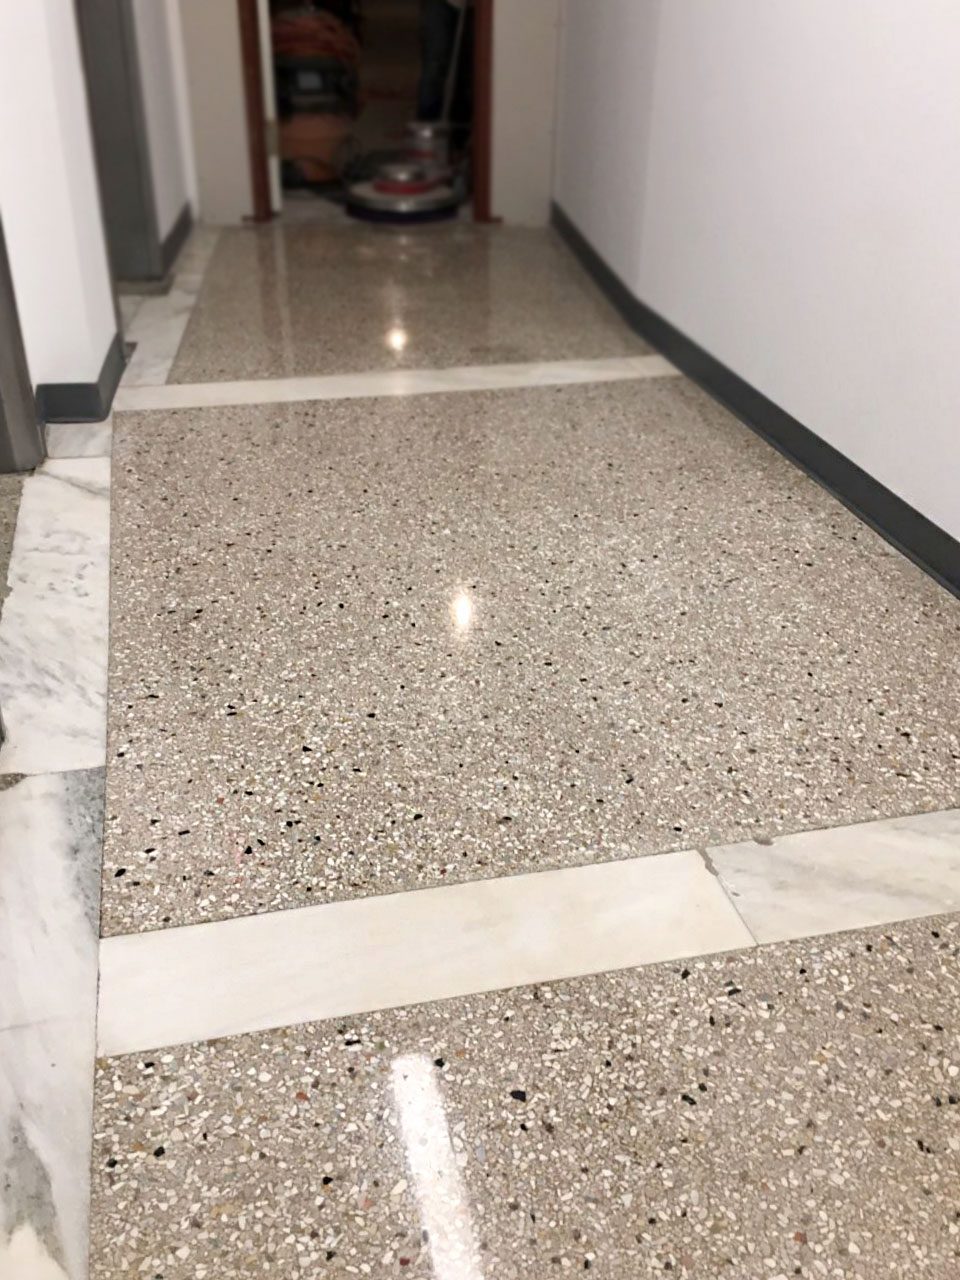 Polished concrete corridor/hallway in NYC building